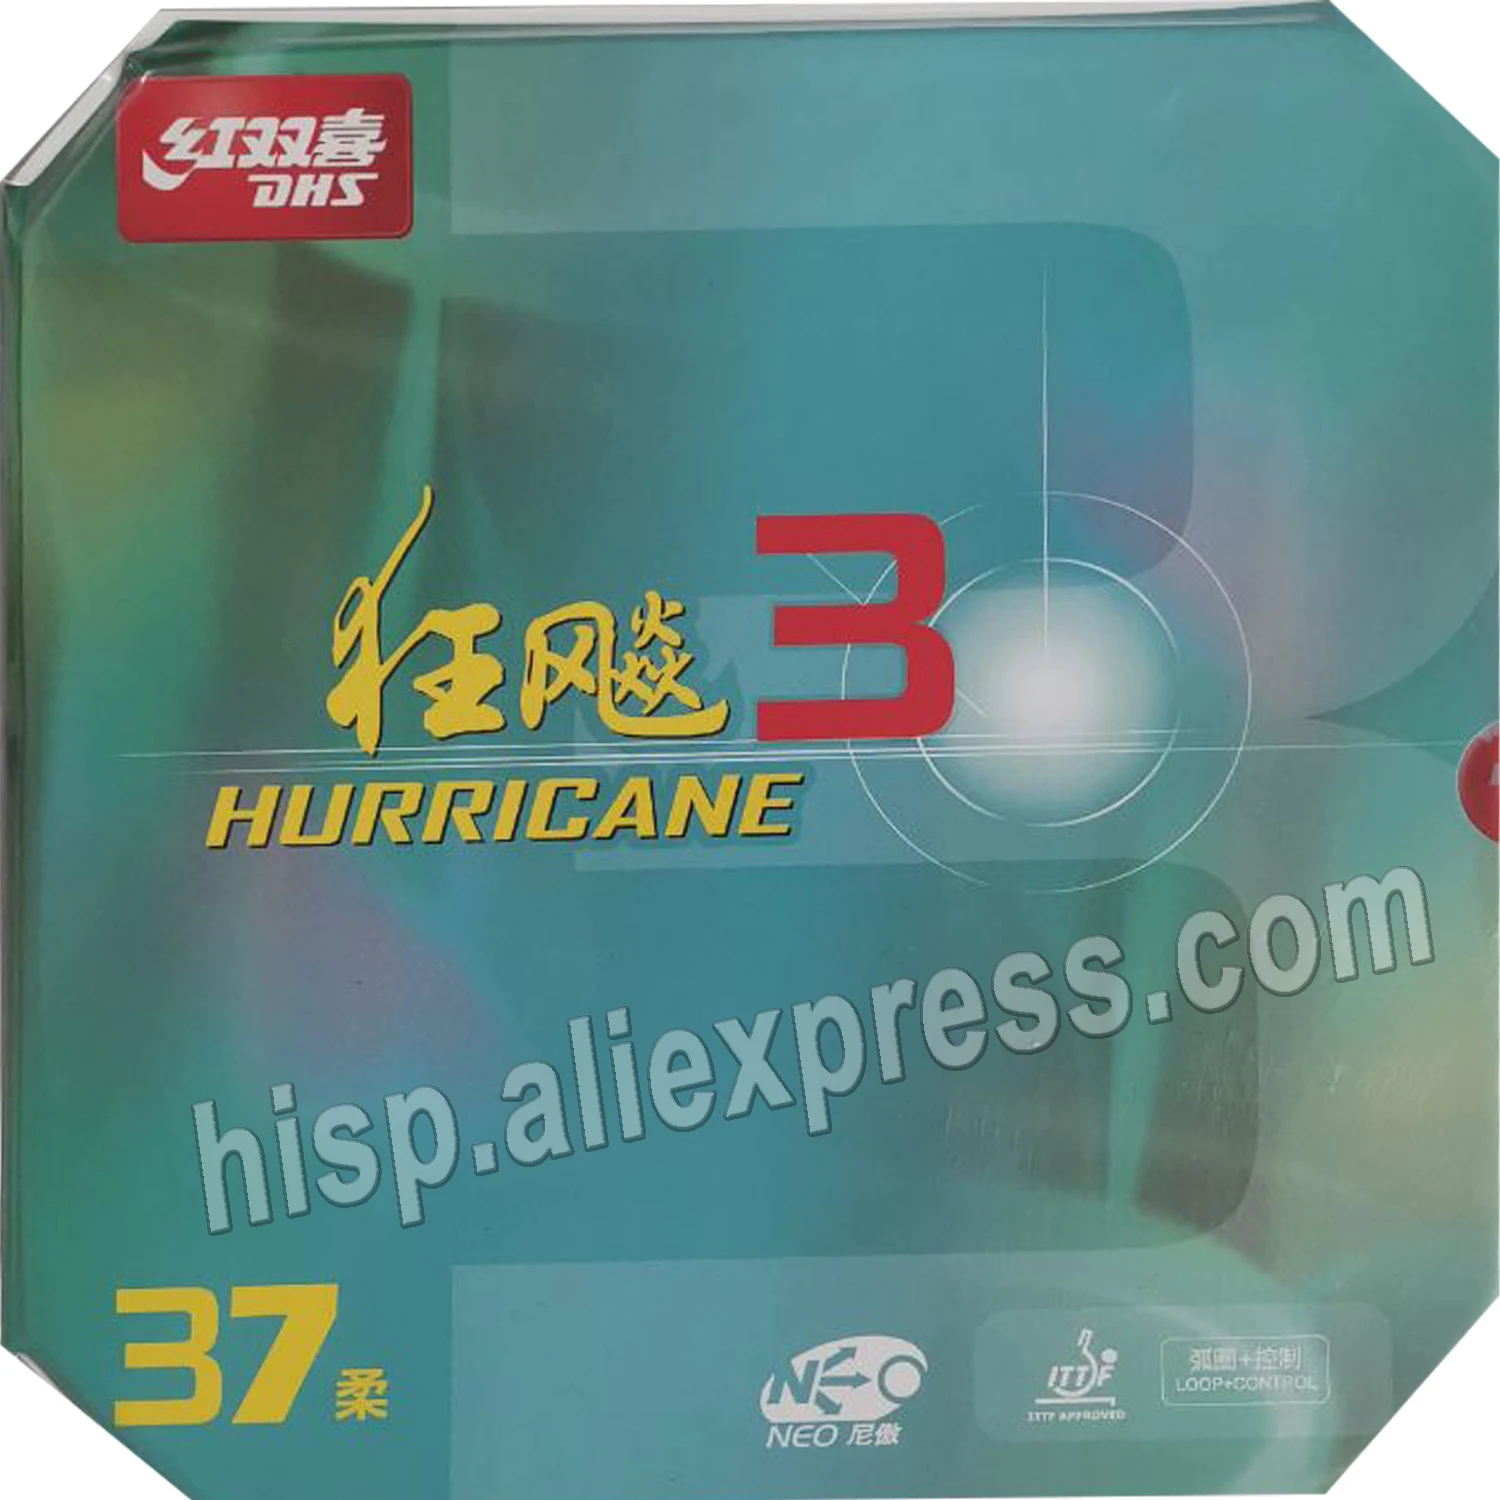 DHS NEO Hurricane3 Hurricane-3 pips-in резина для настольного тенниса пинг-понга с оранжевой - Фото №1